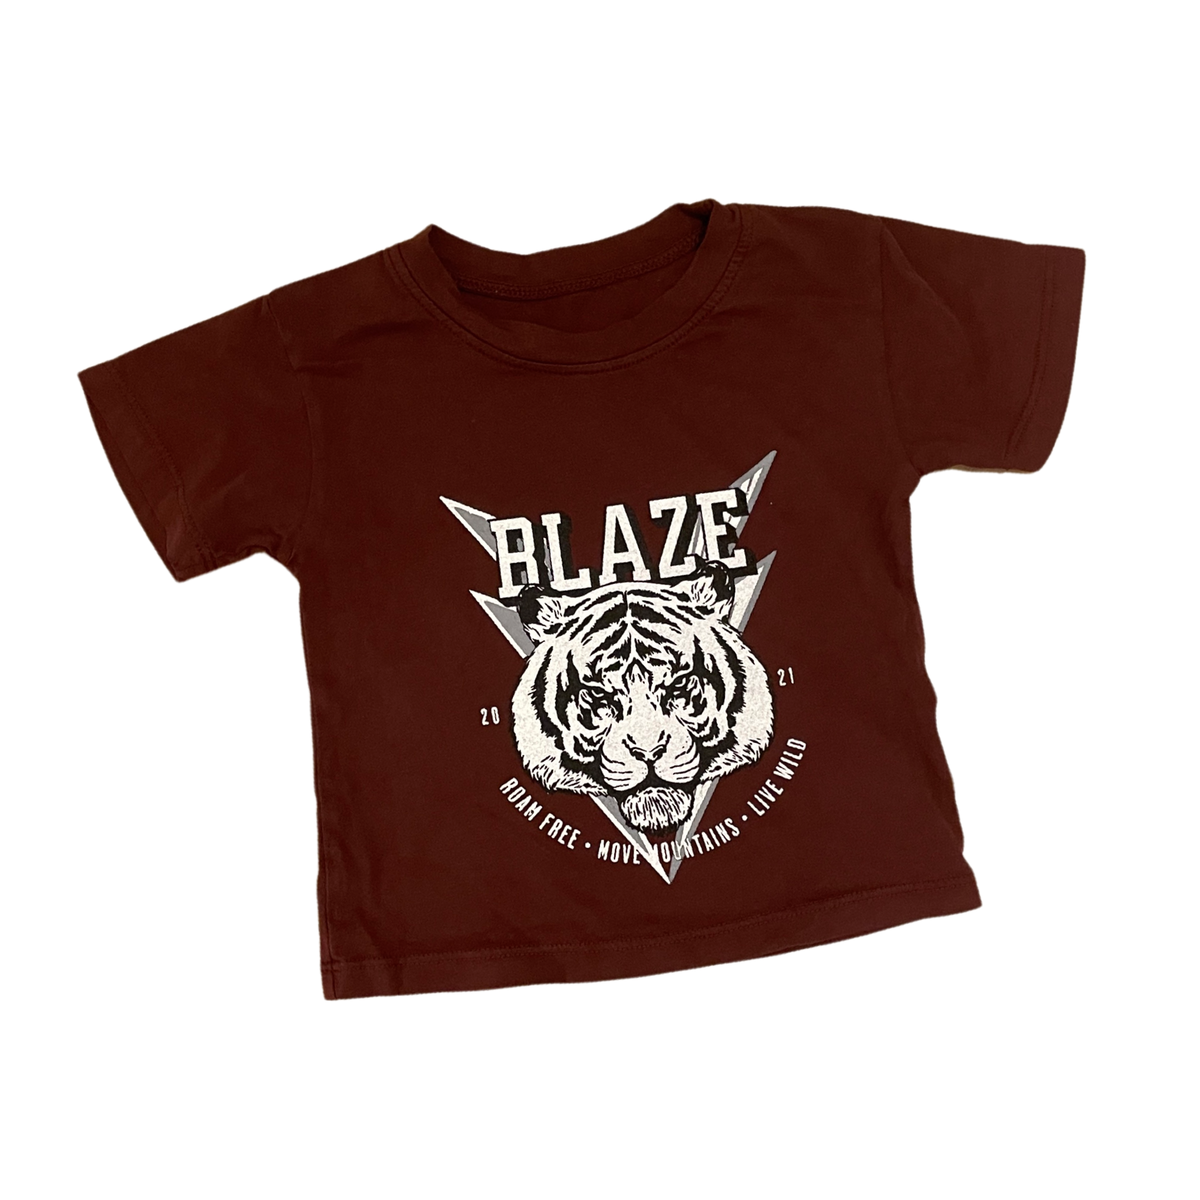 Blaze Kids wear legacy tee brave tiger tee in raisin against white backdrop